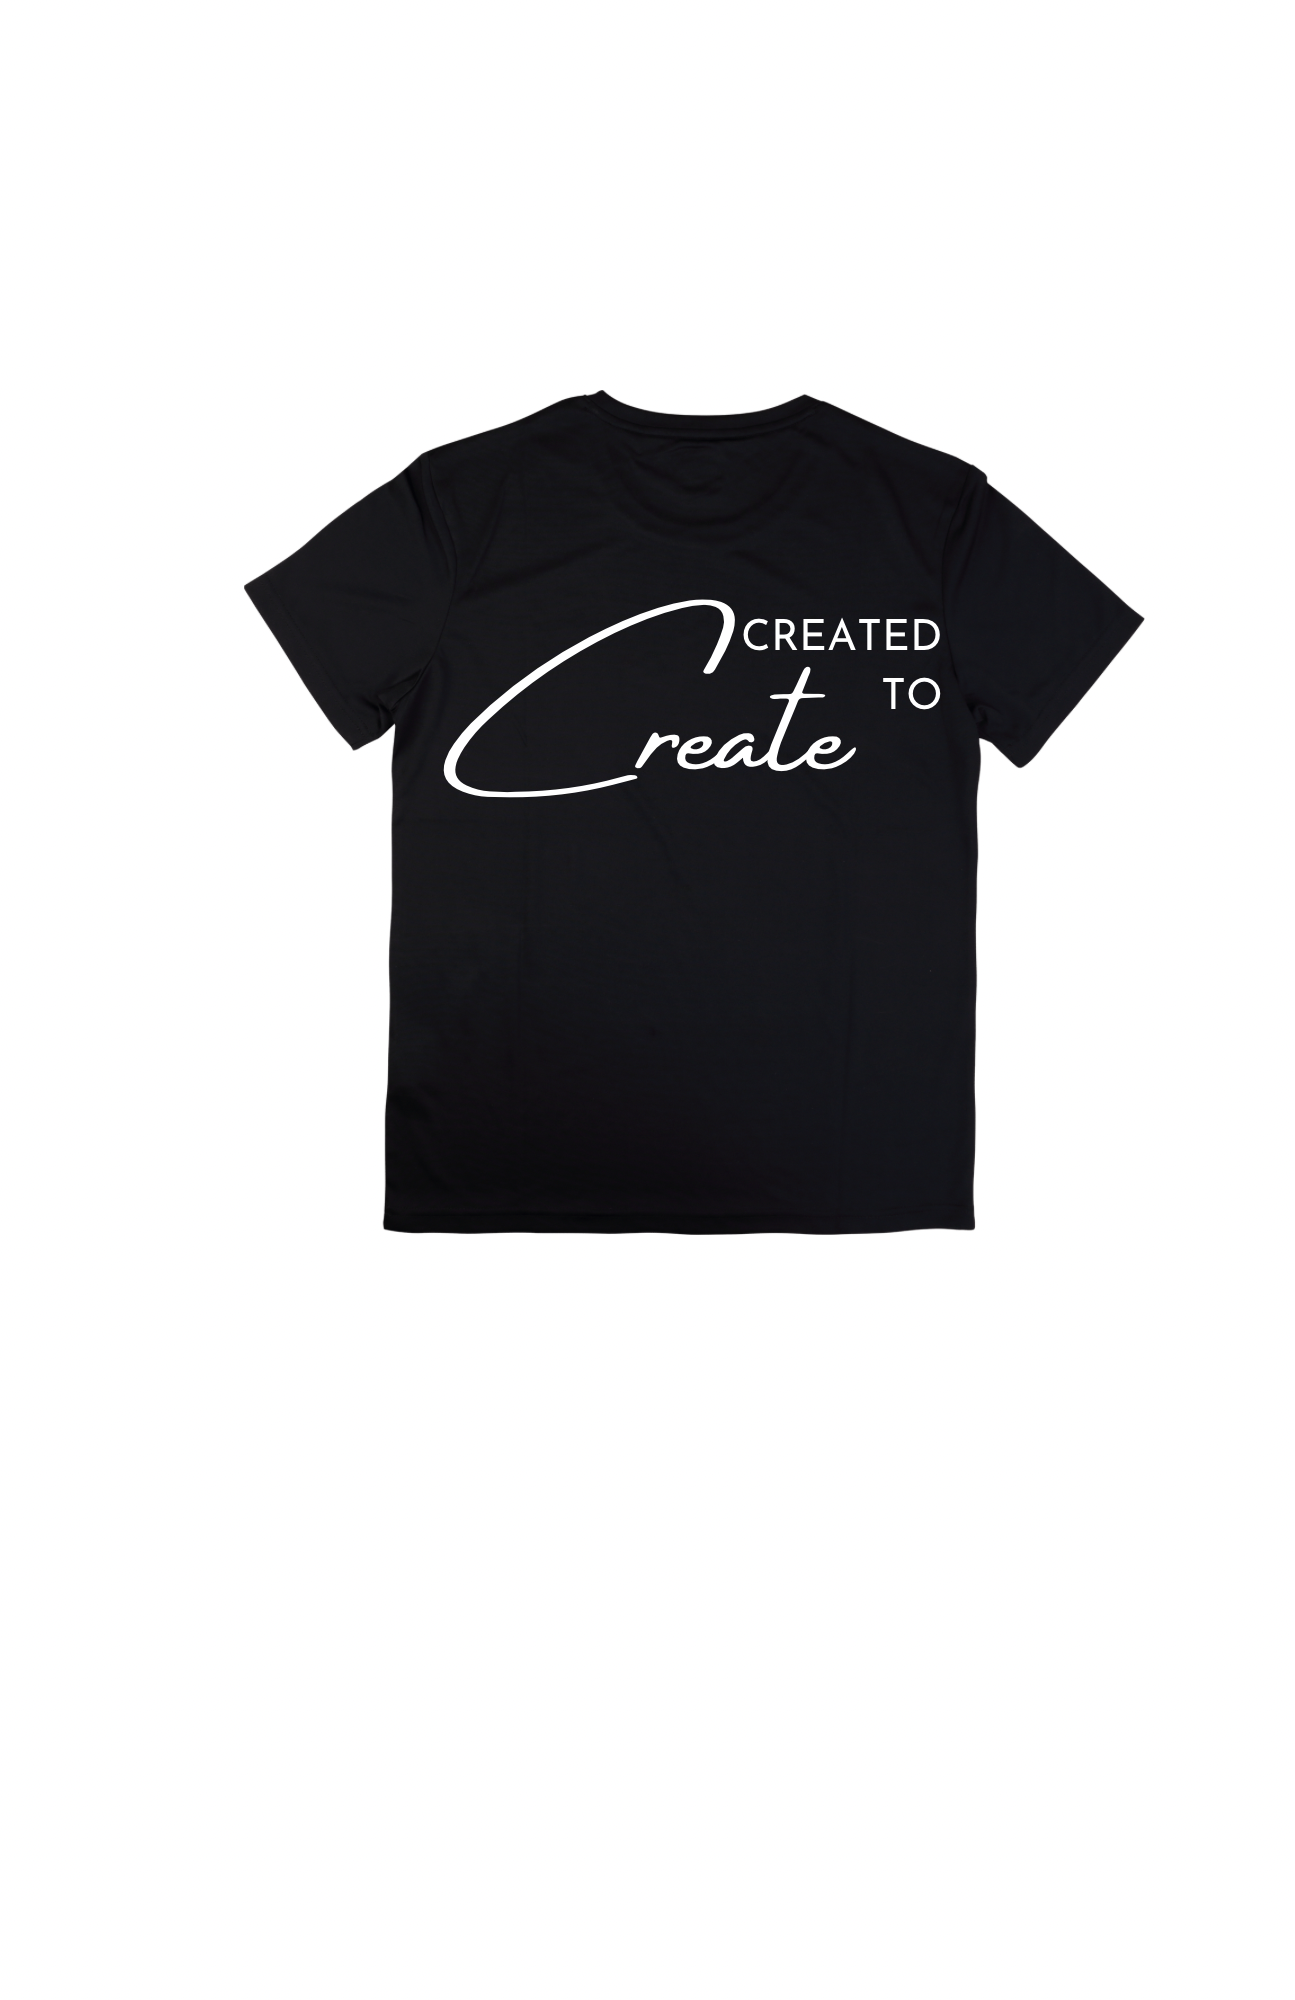 Created to create